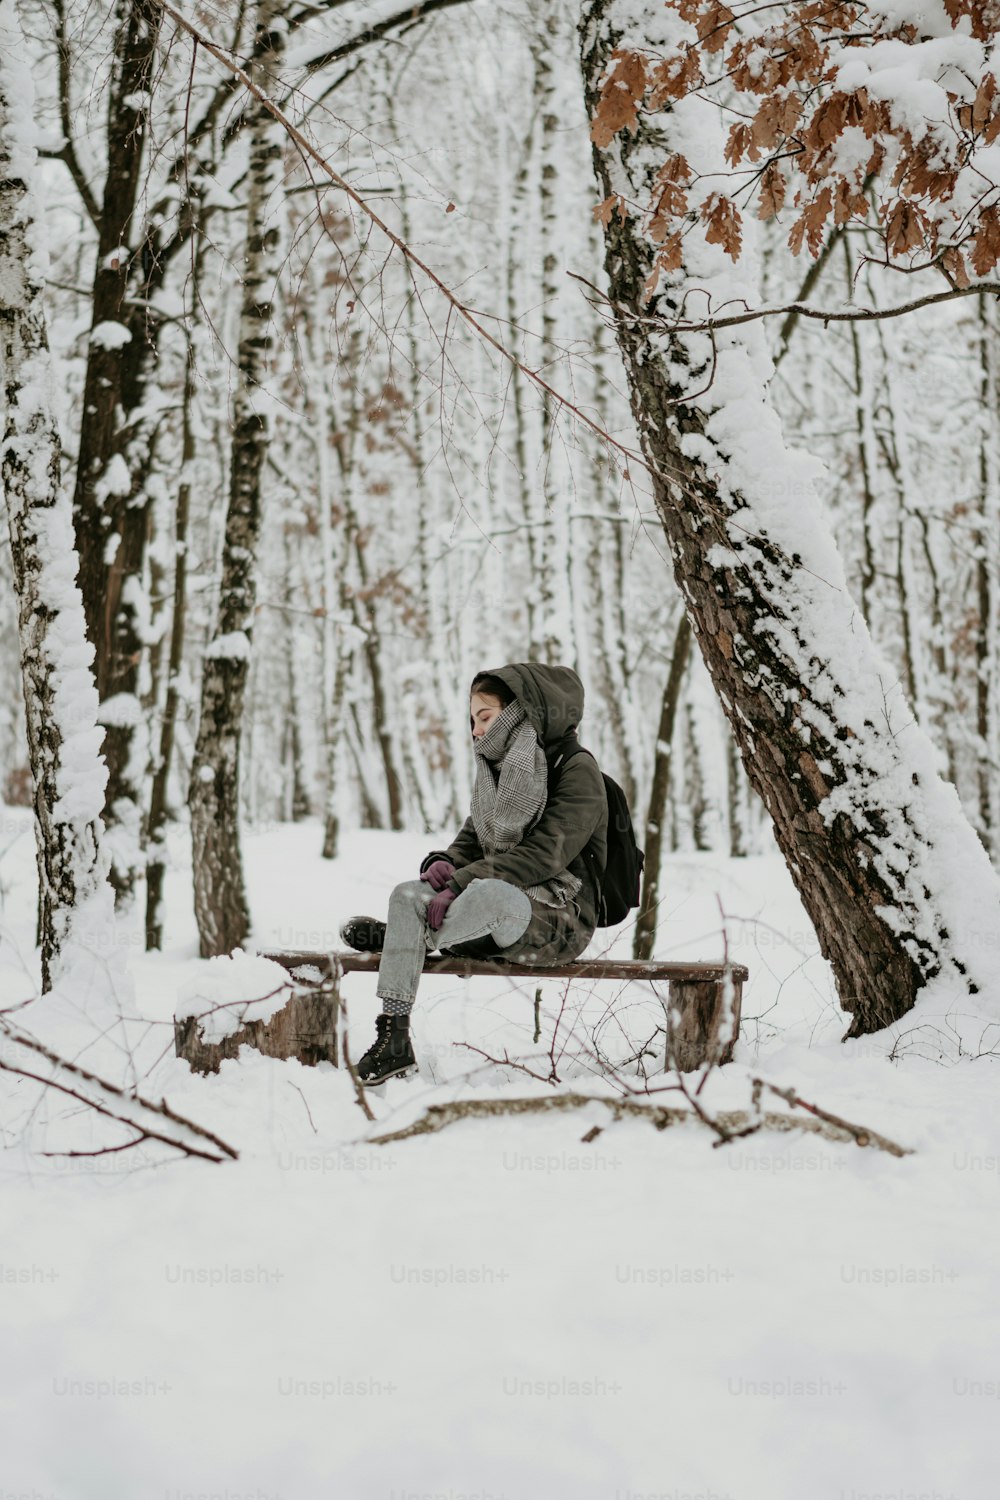 una persona seduta su una panchina nella neve